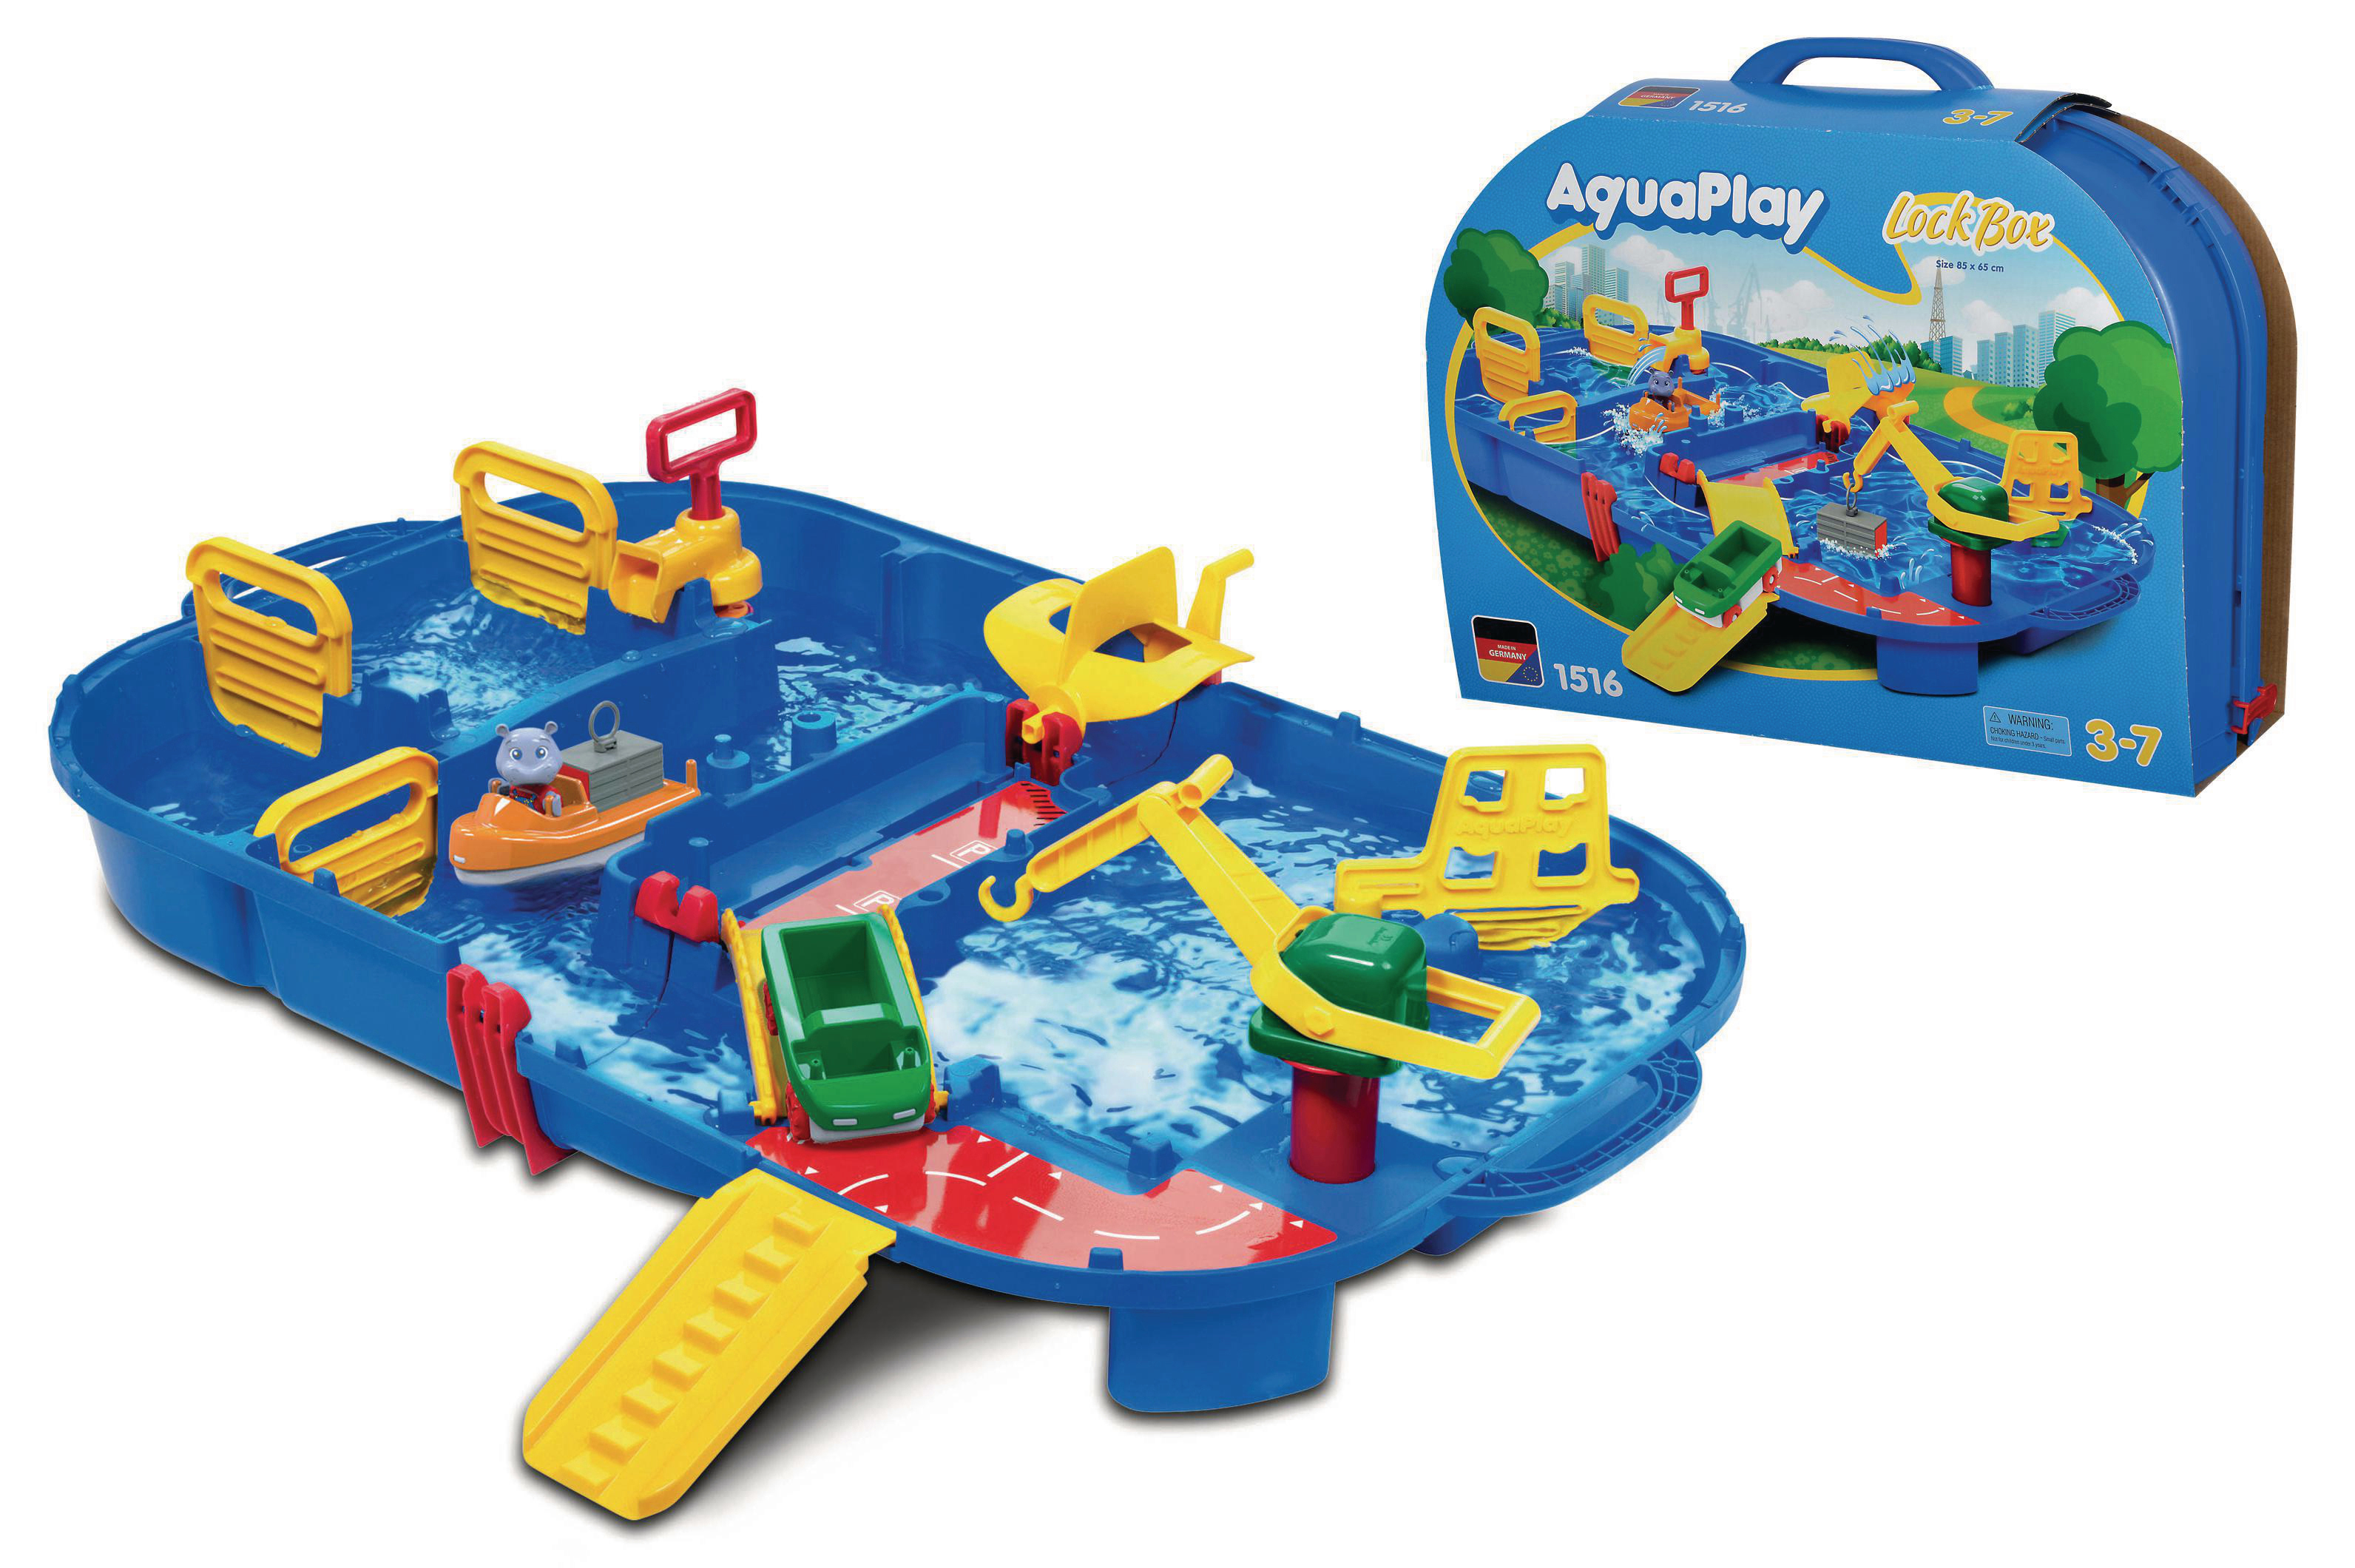 BIG AquaPlay LockBox Aquaplay Spielset Blau